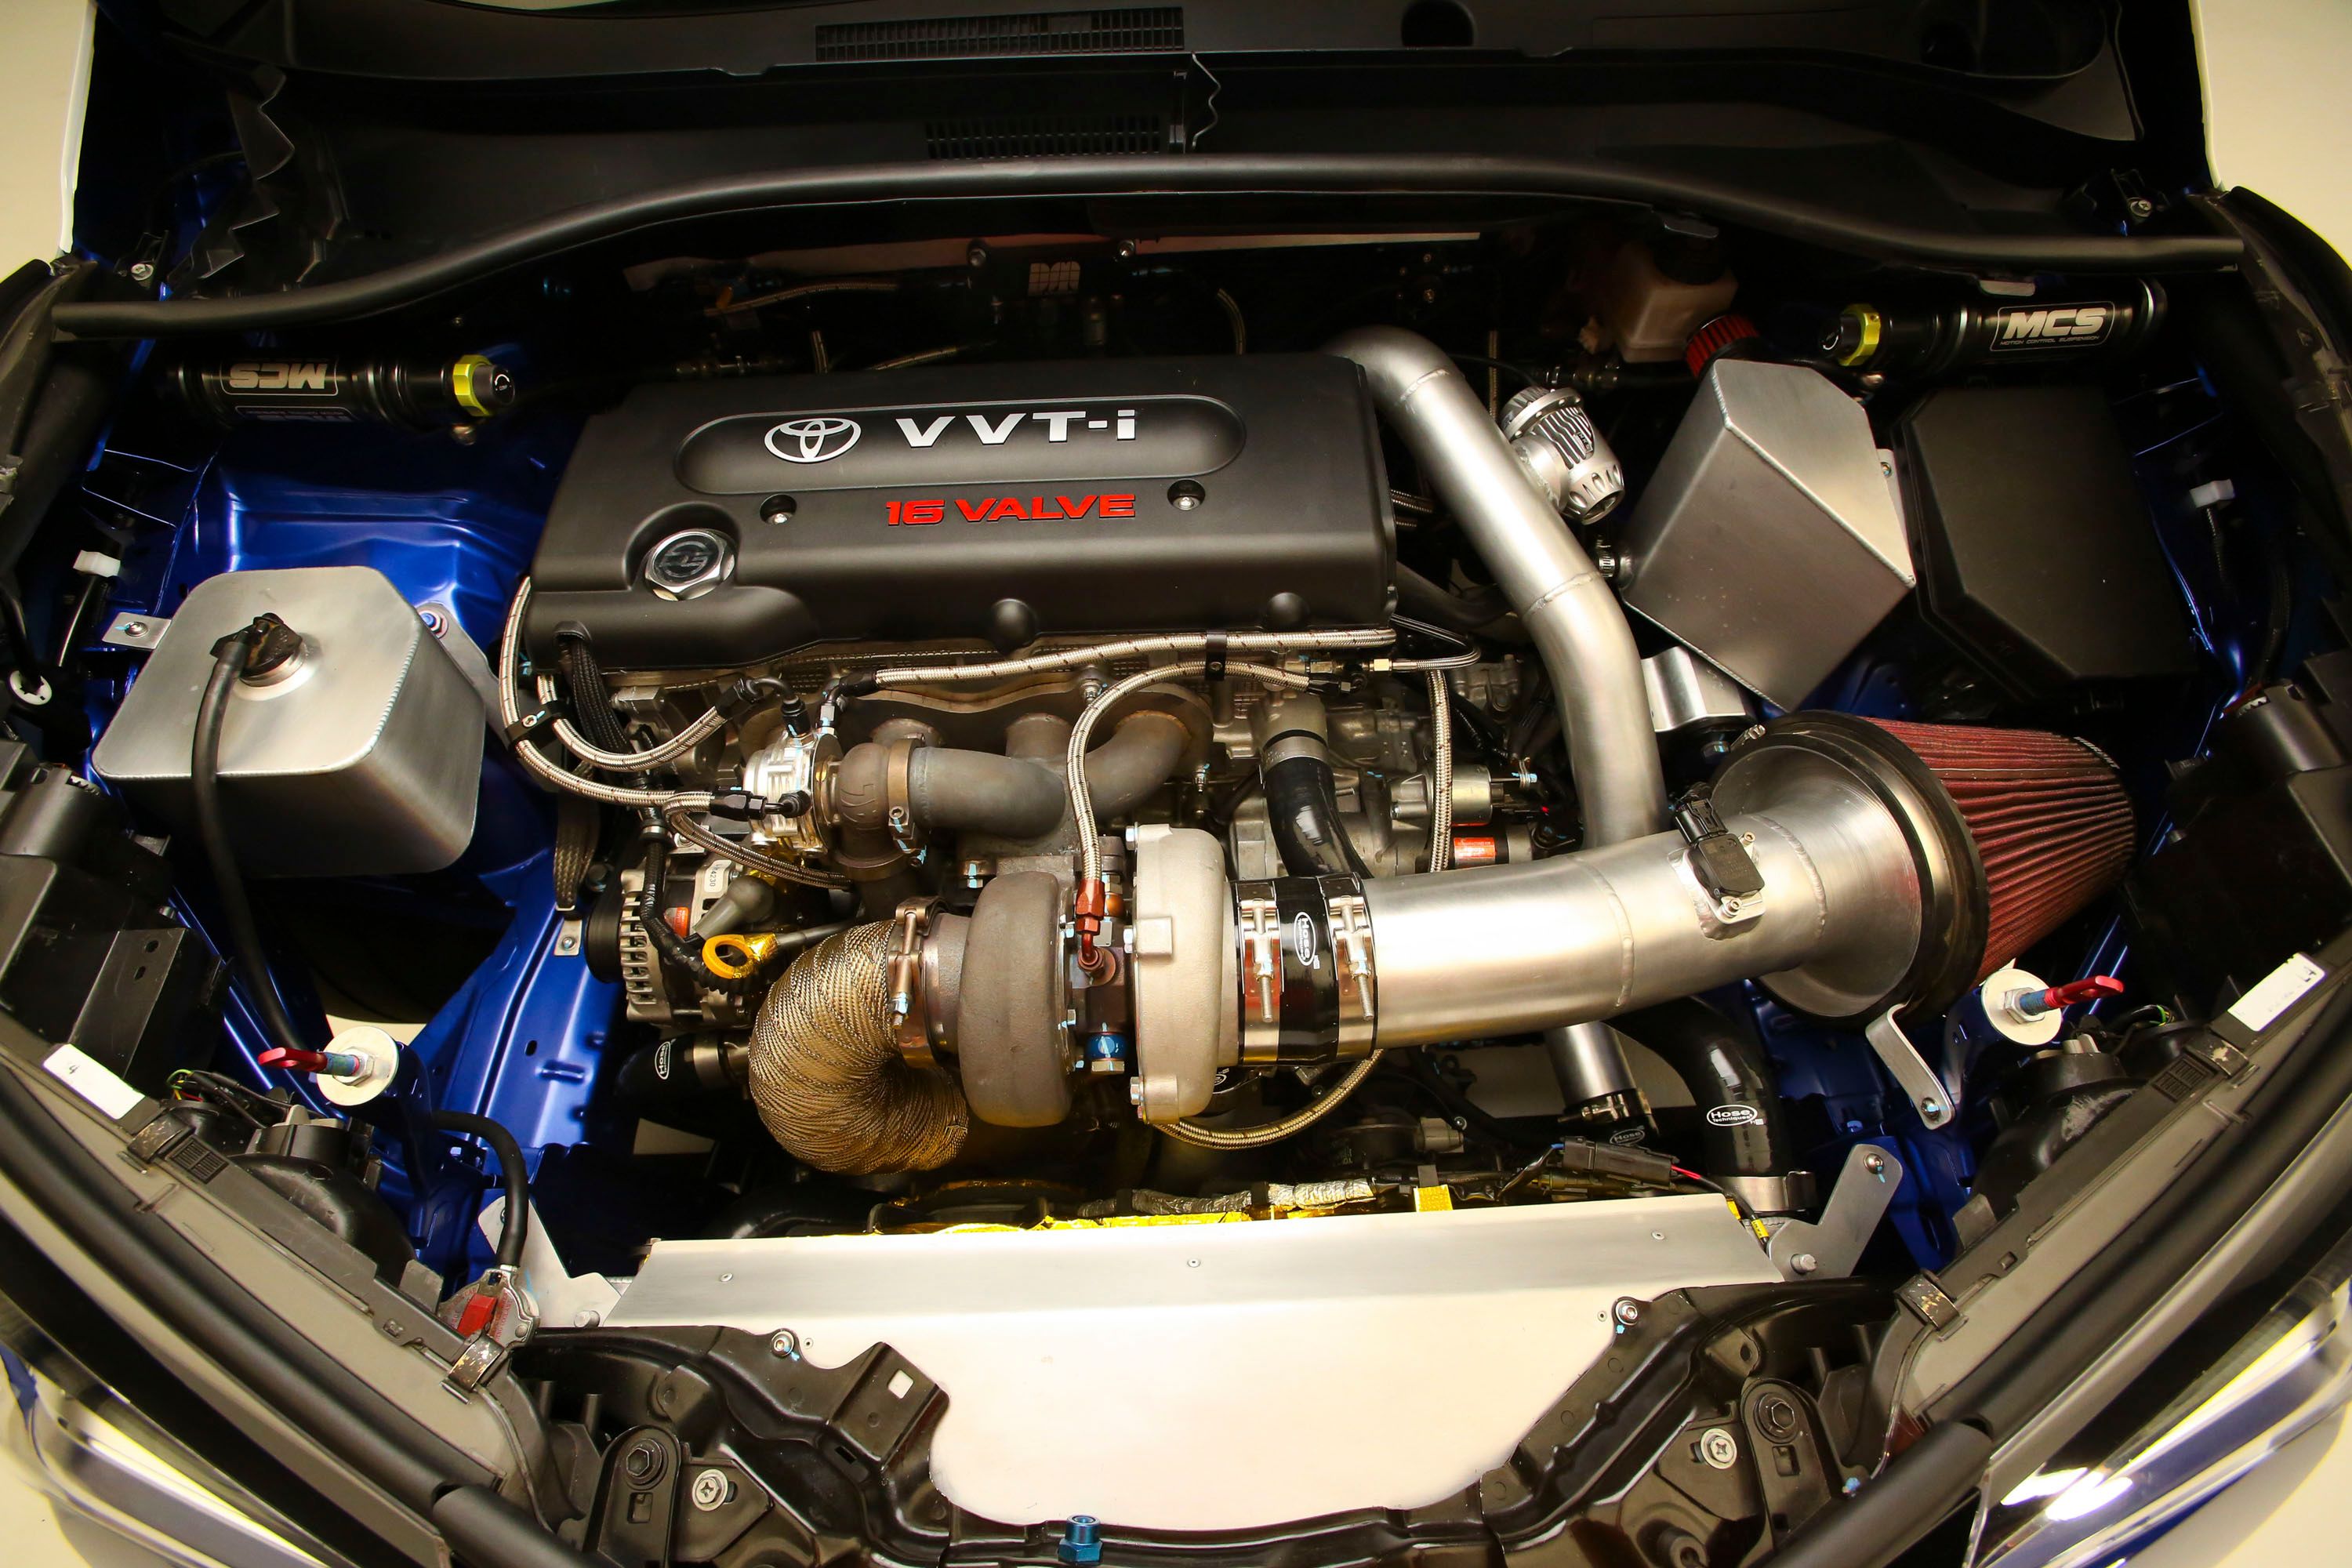 Turbocharged 2.4-liter inline four-cylinder